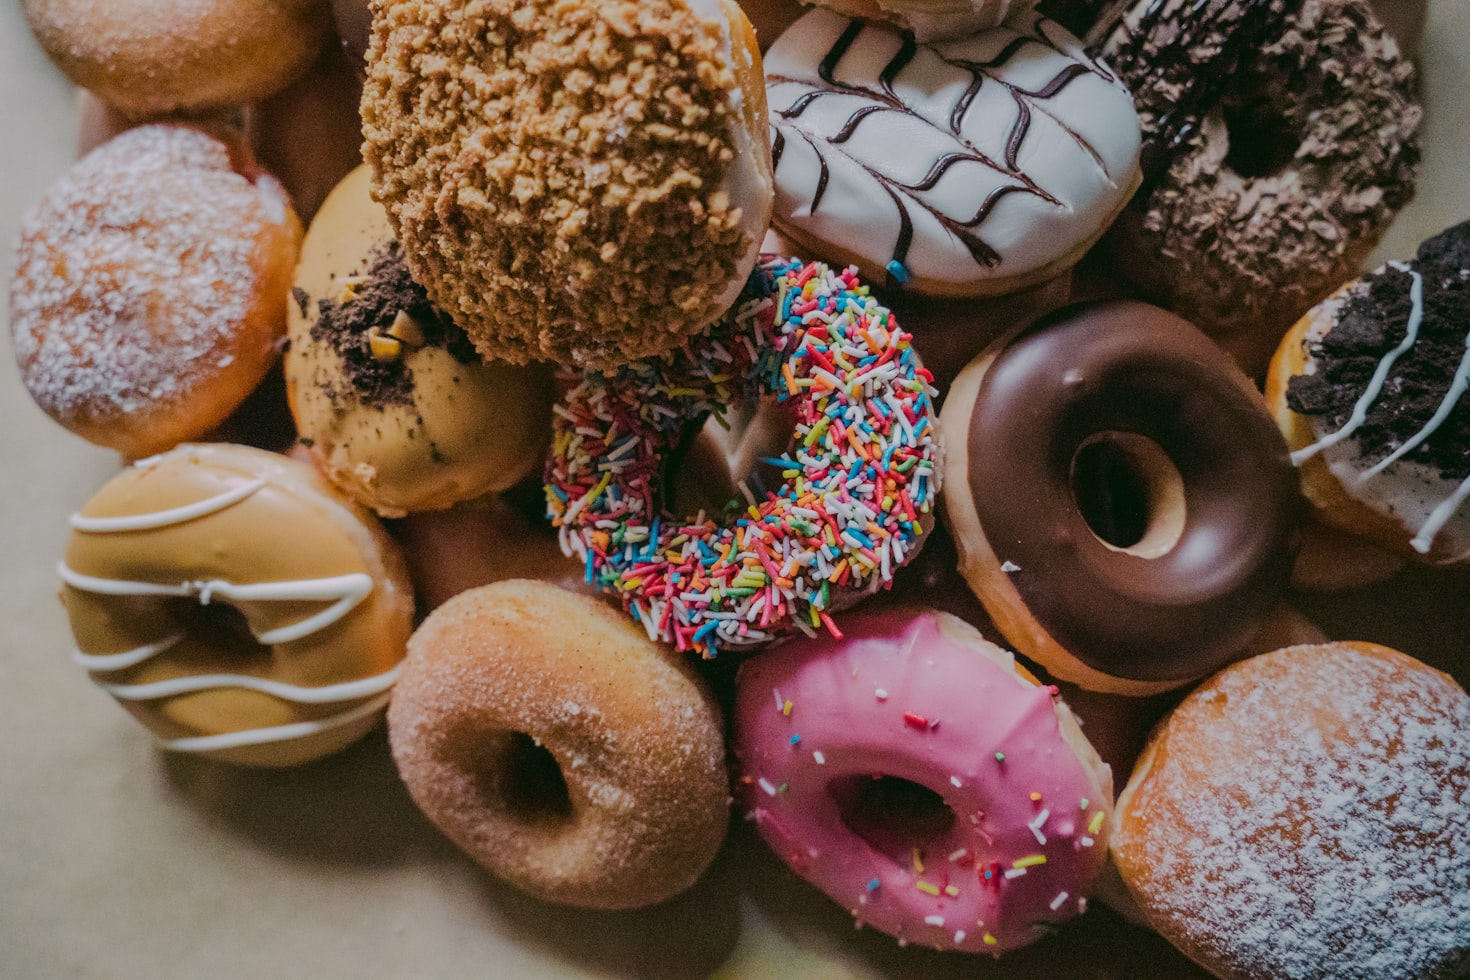 Top 10 Donuts Lawrenceburg Ky Based On User Rating